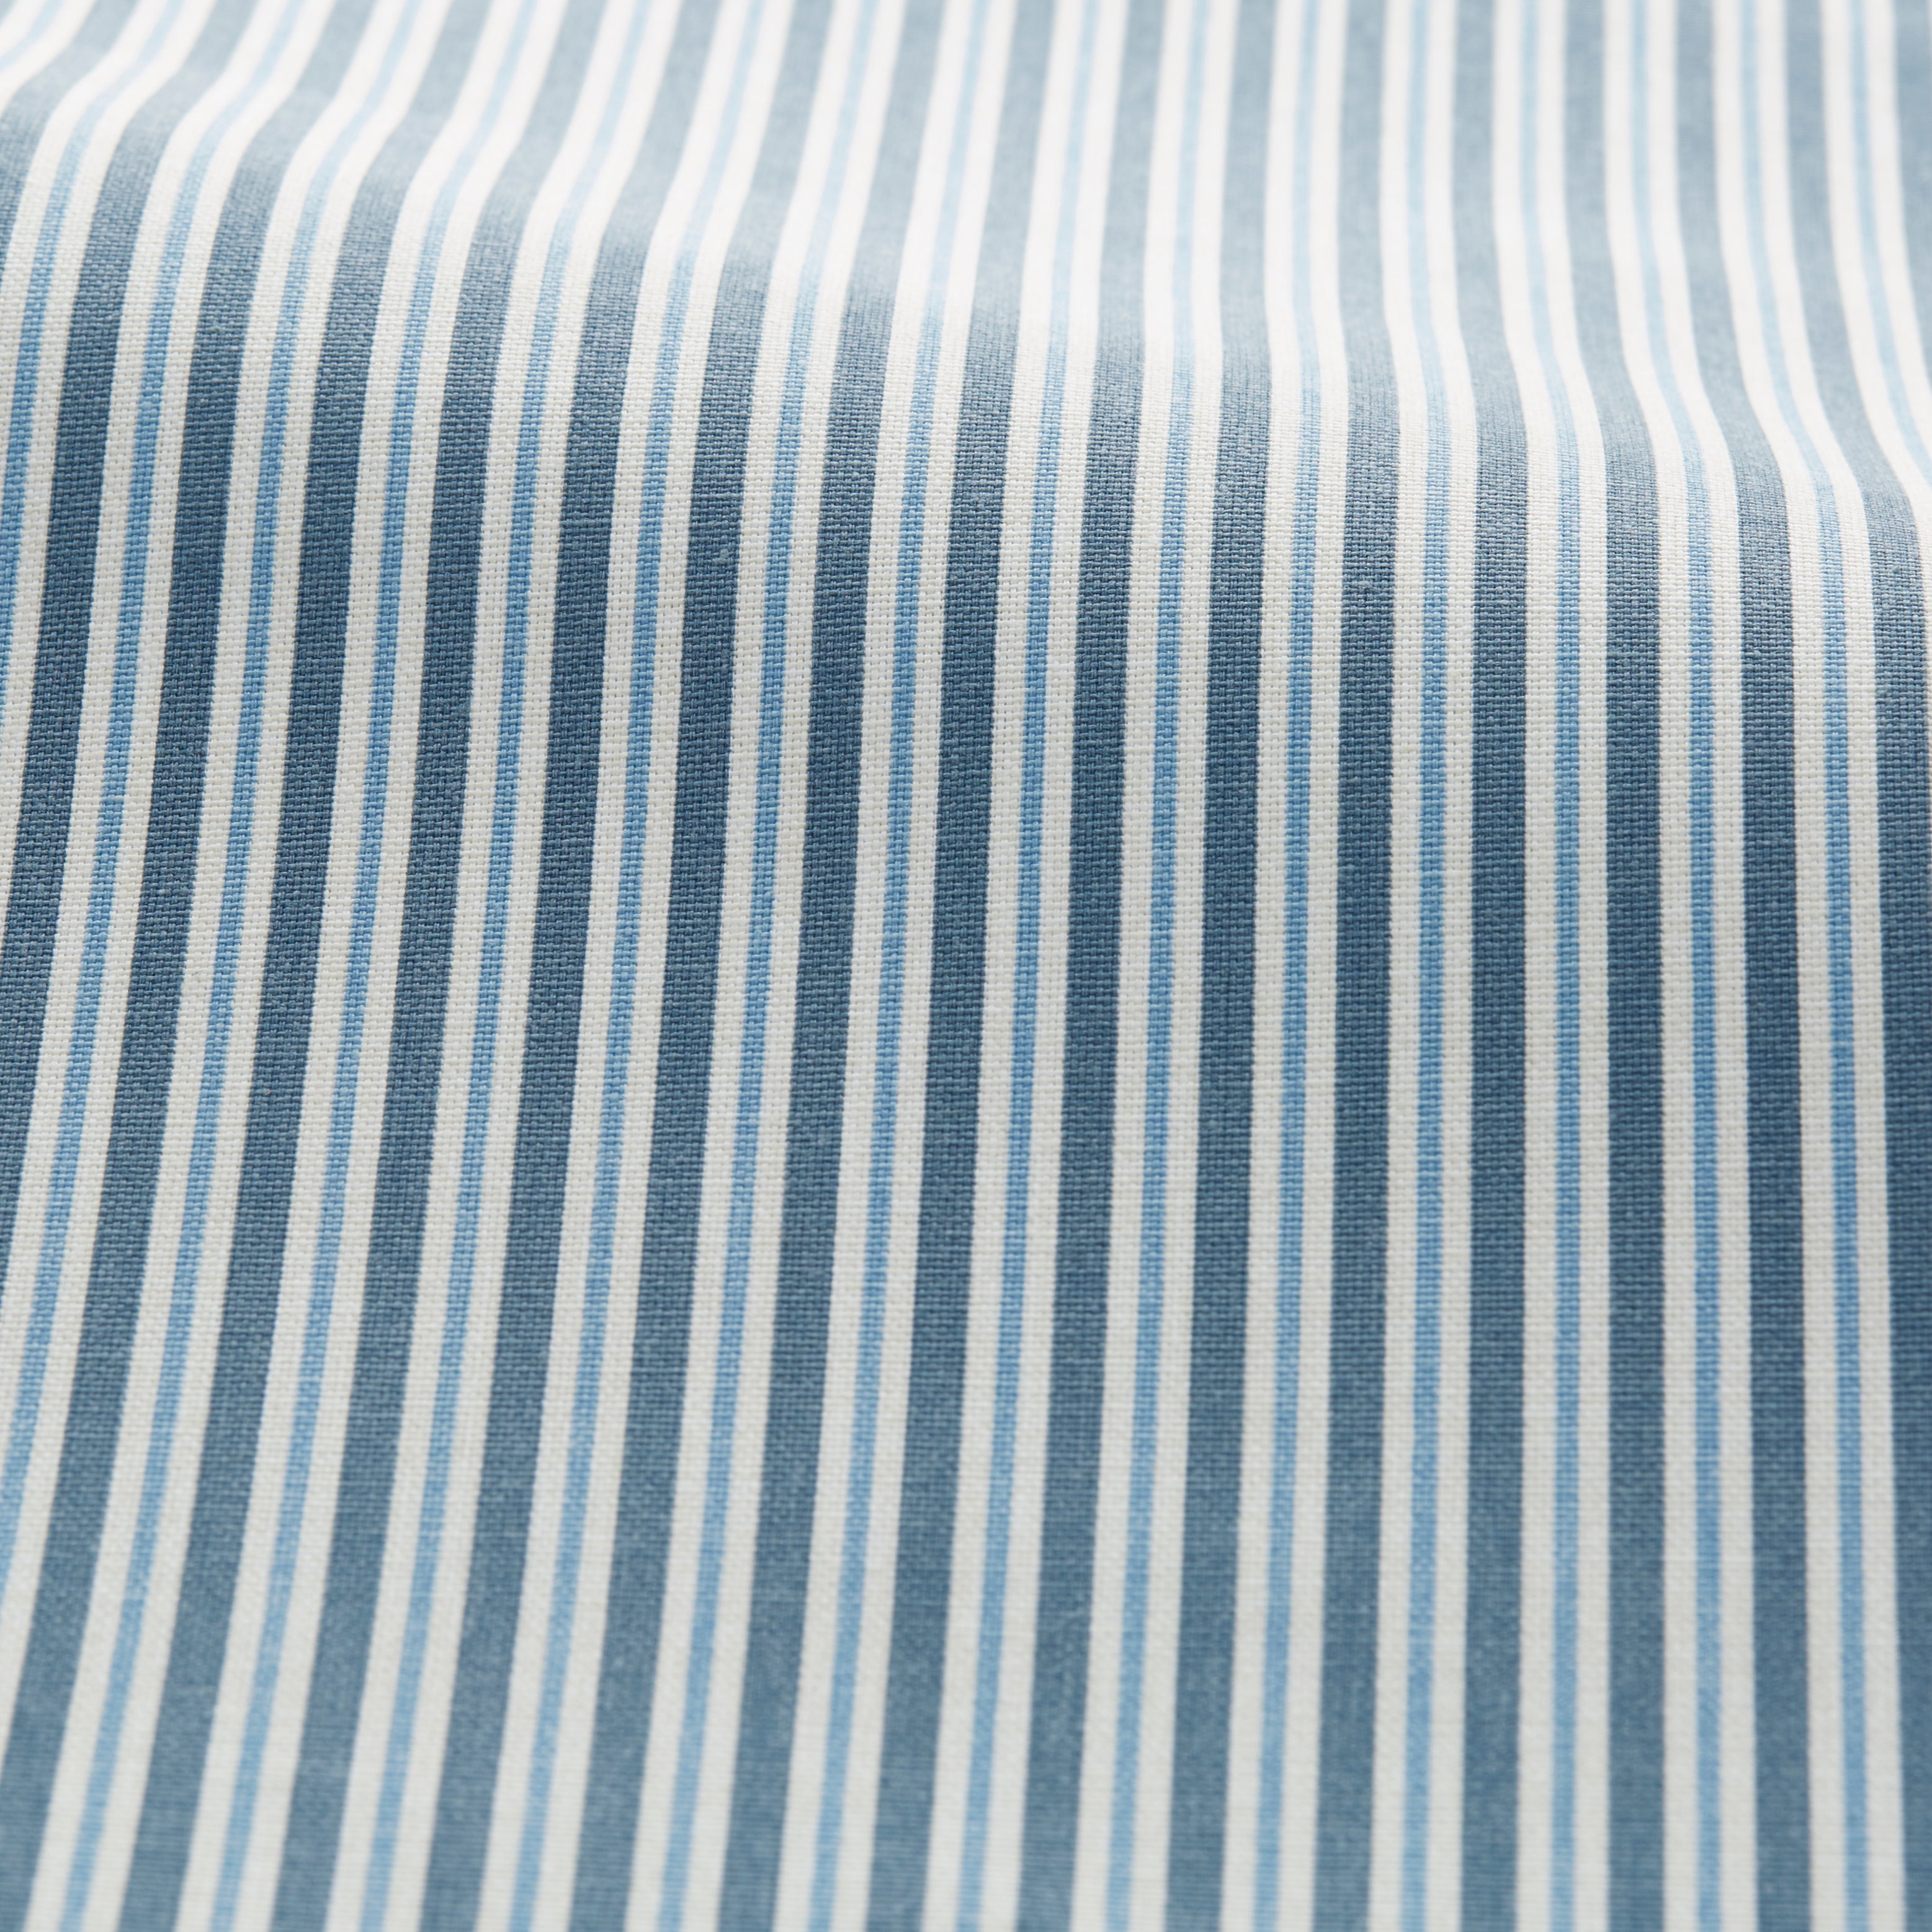 Bay Stripe Made to Measure Fabric Sample Bay Stripe Indigo